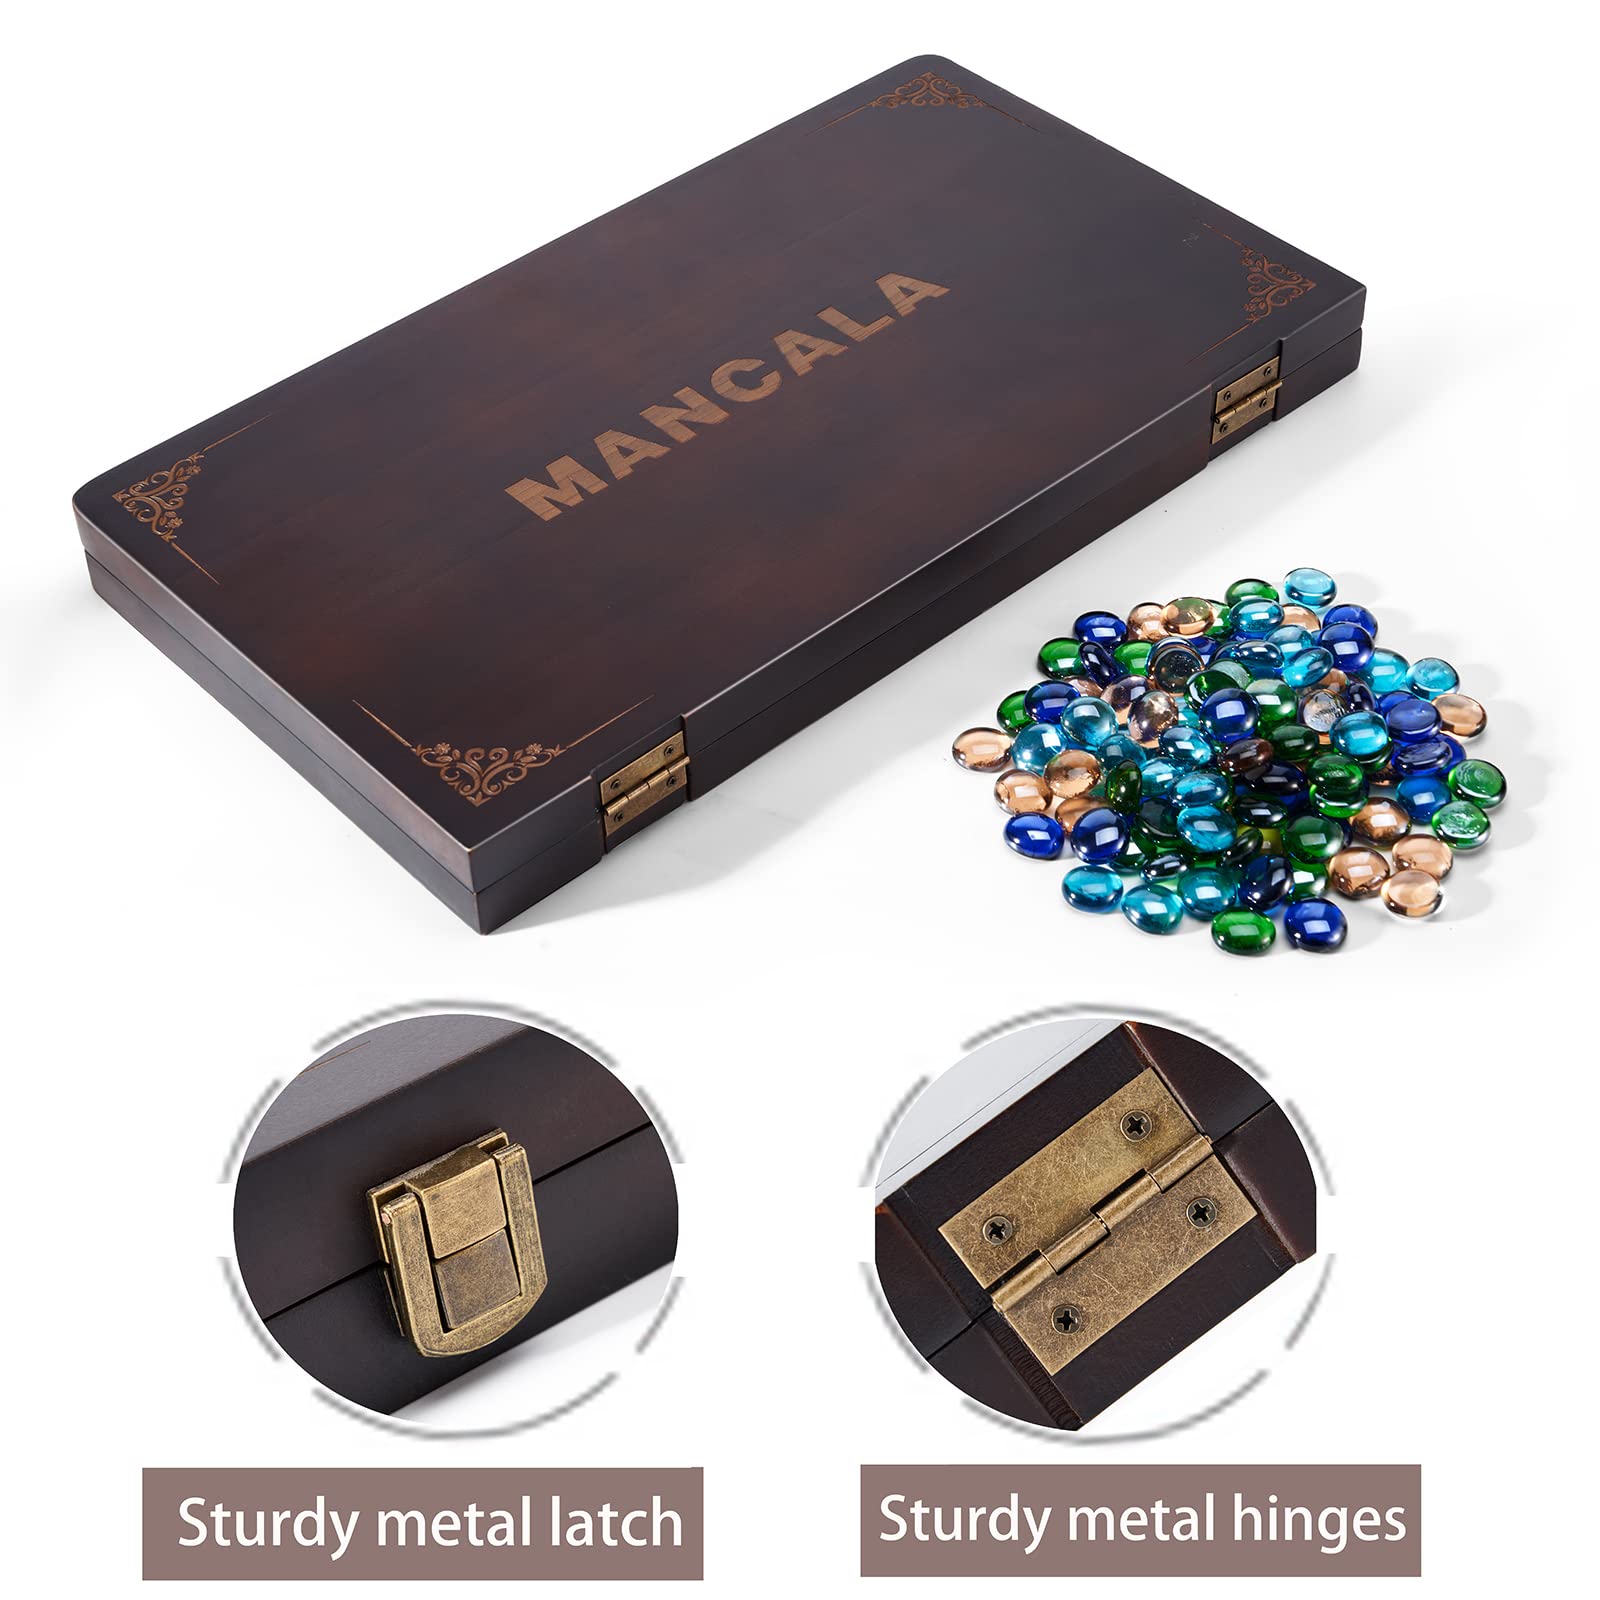 VAMSLOVE Mancala 4 Player Board Game Set, Luxury Solid Wood Folding Mancala Board, 96+12 Bonus Multi Color Glass Stone Beads Game Instructions Included